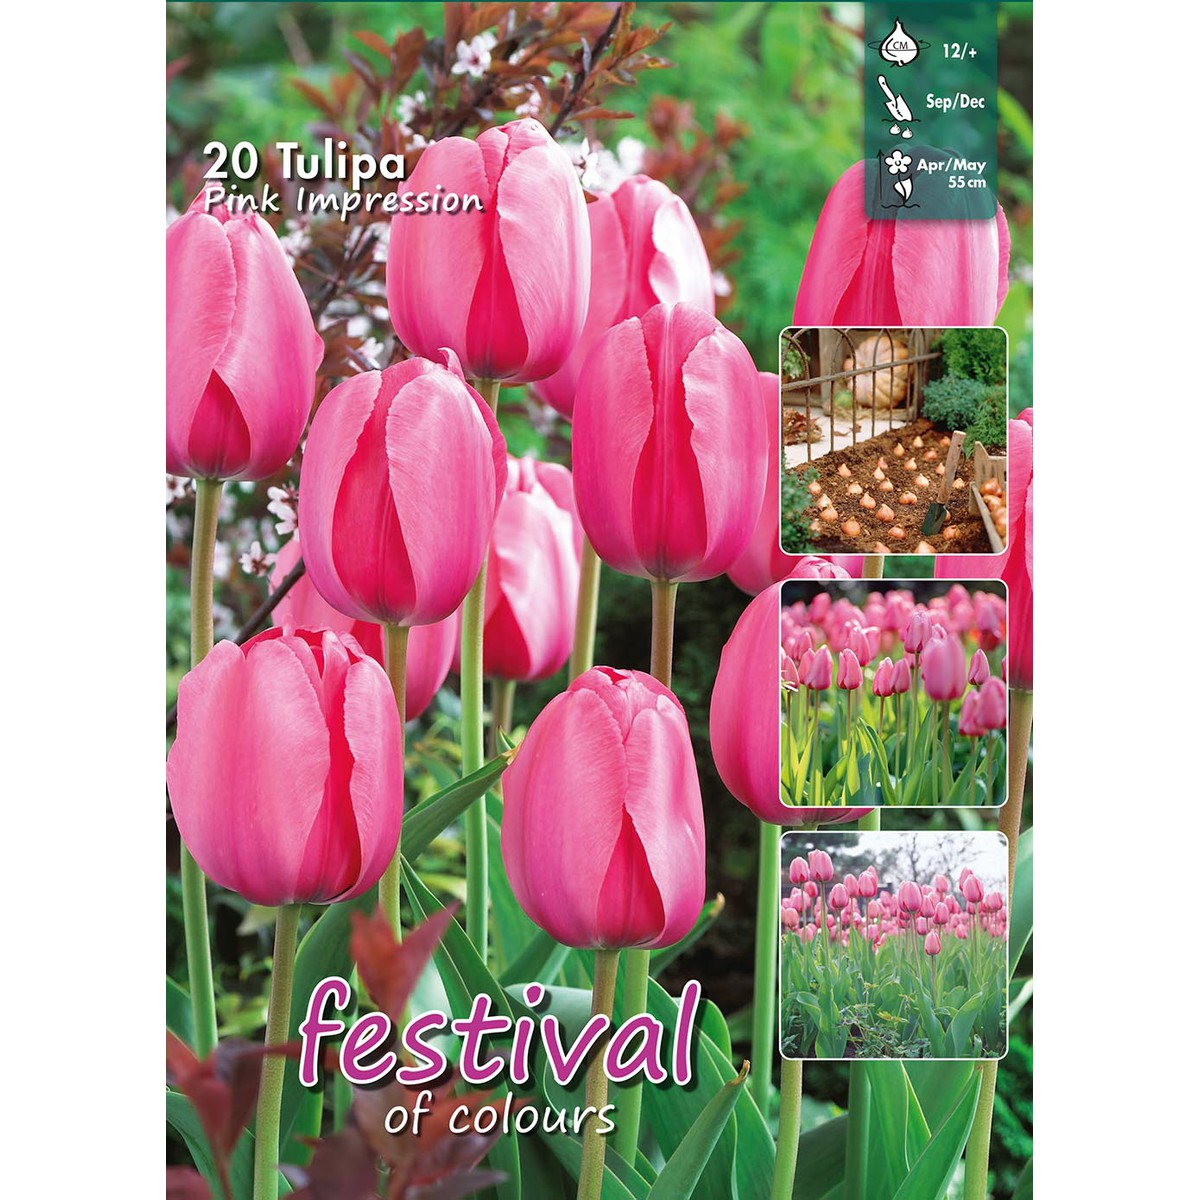   Tulipes 'Pink impression'  25 pcs 11/12